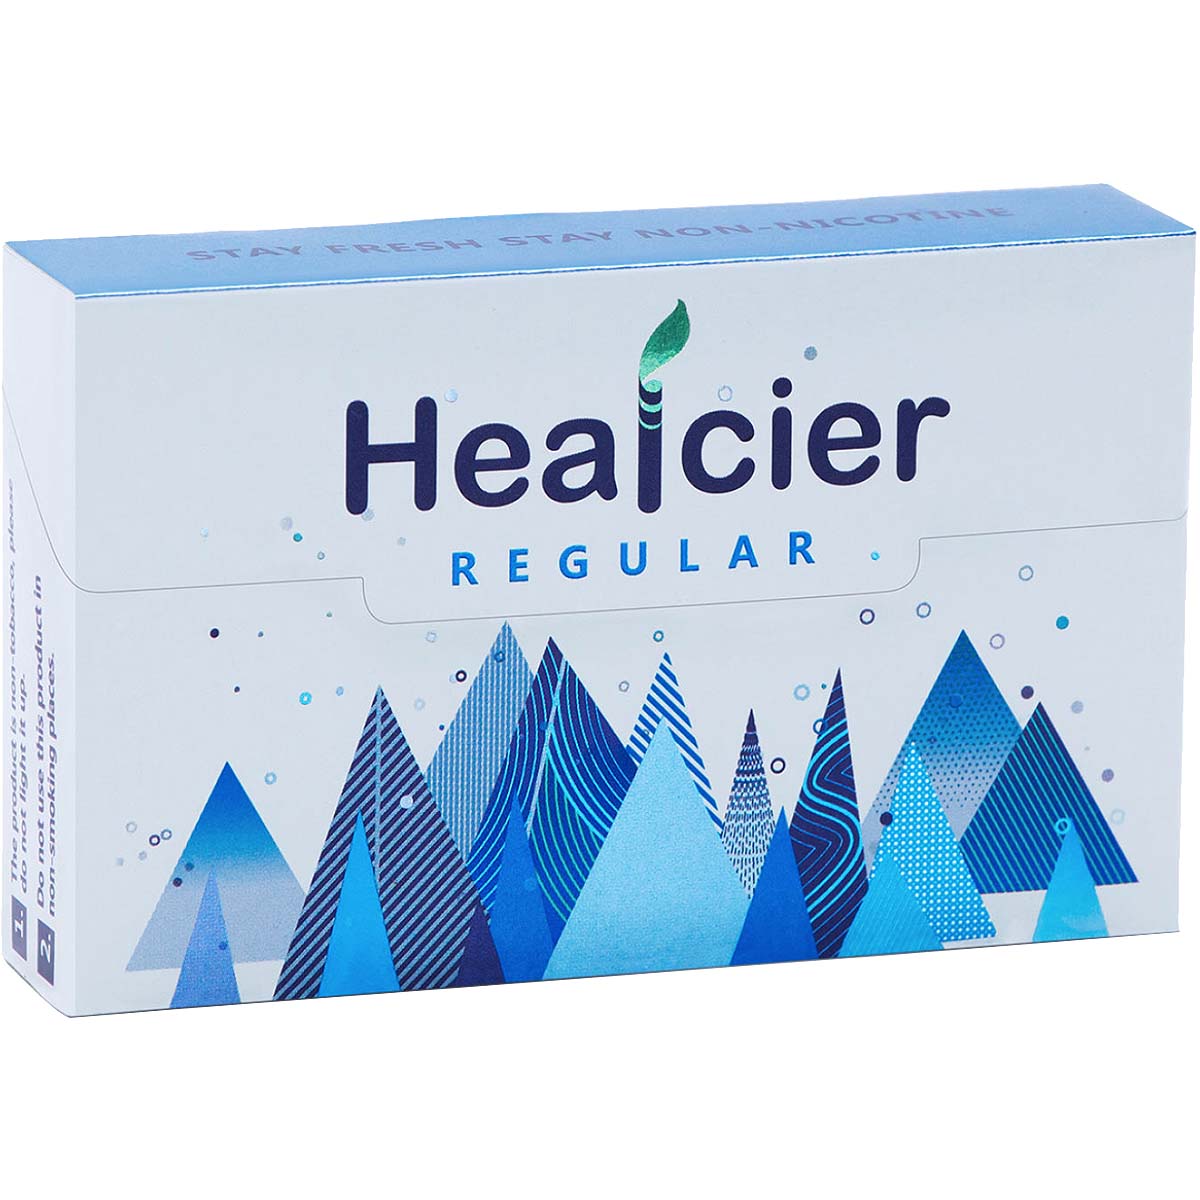 Healcier - Regular Non-Nicotine (1 pack)